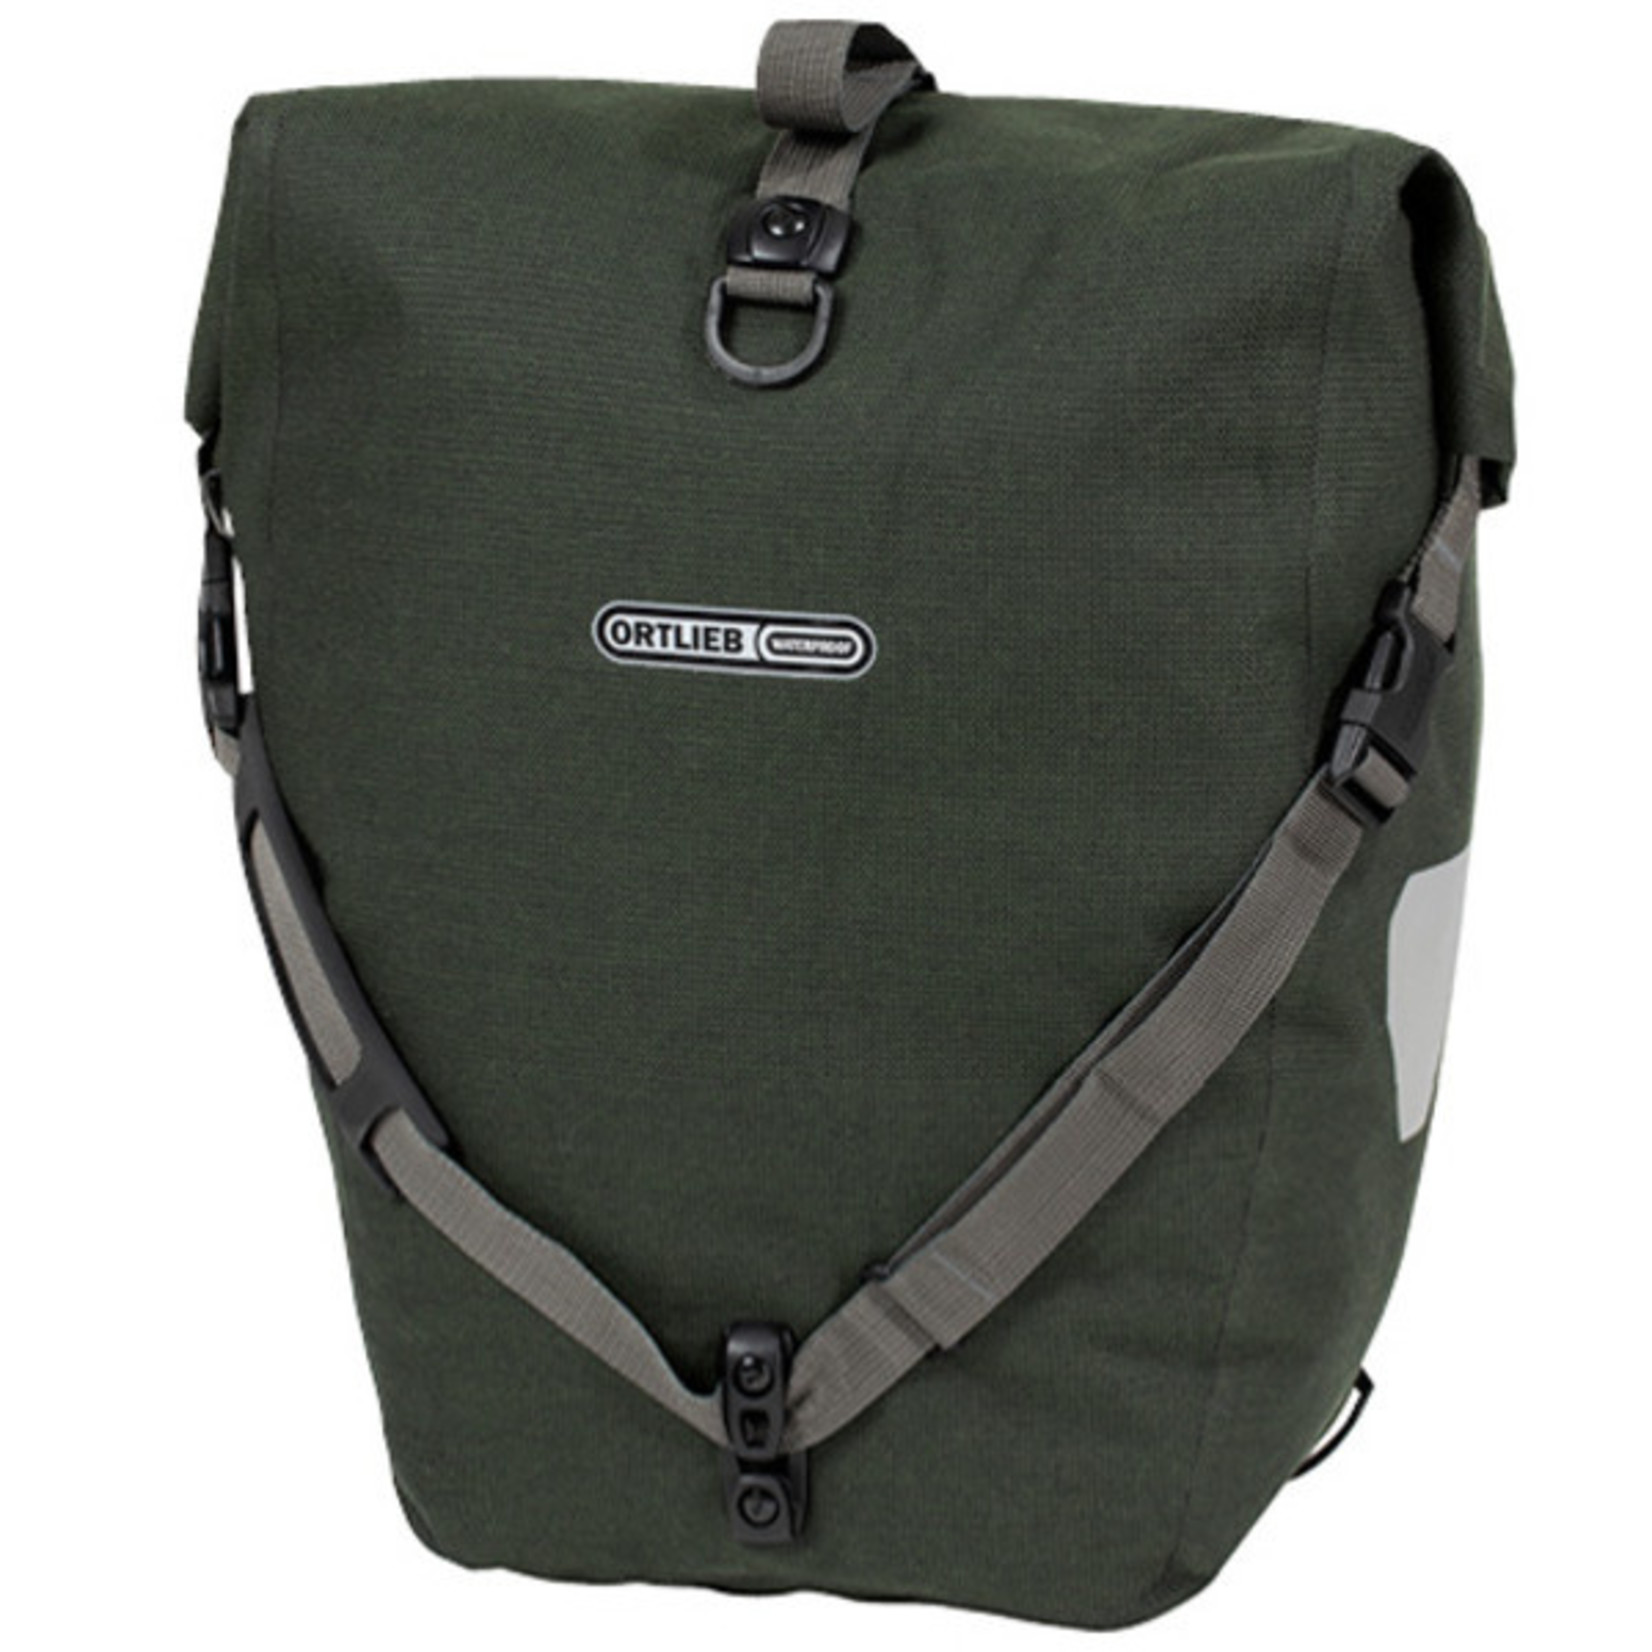 Ortlieb Ortlieb Back-Roller Urban QL3.1 Pannier Bag F5513 - 20L Pine (Single Bag)